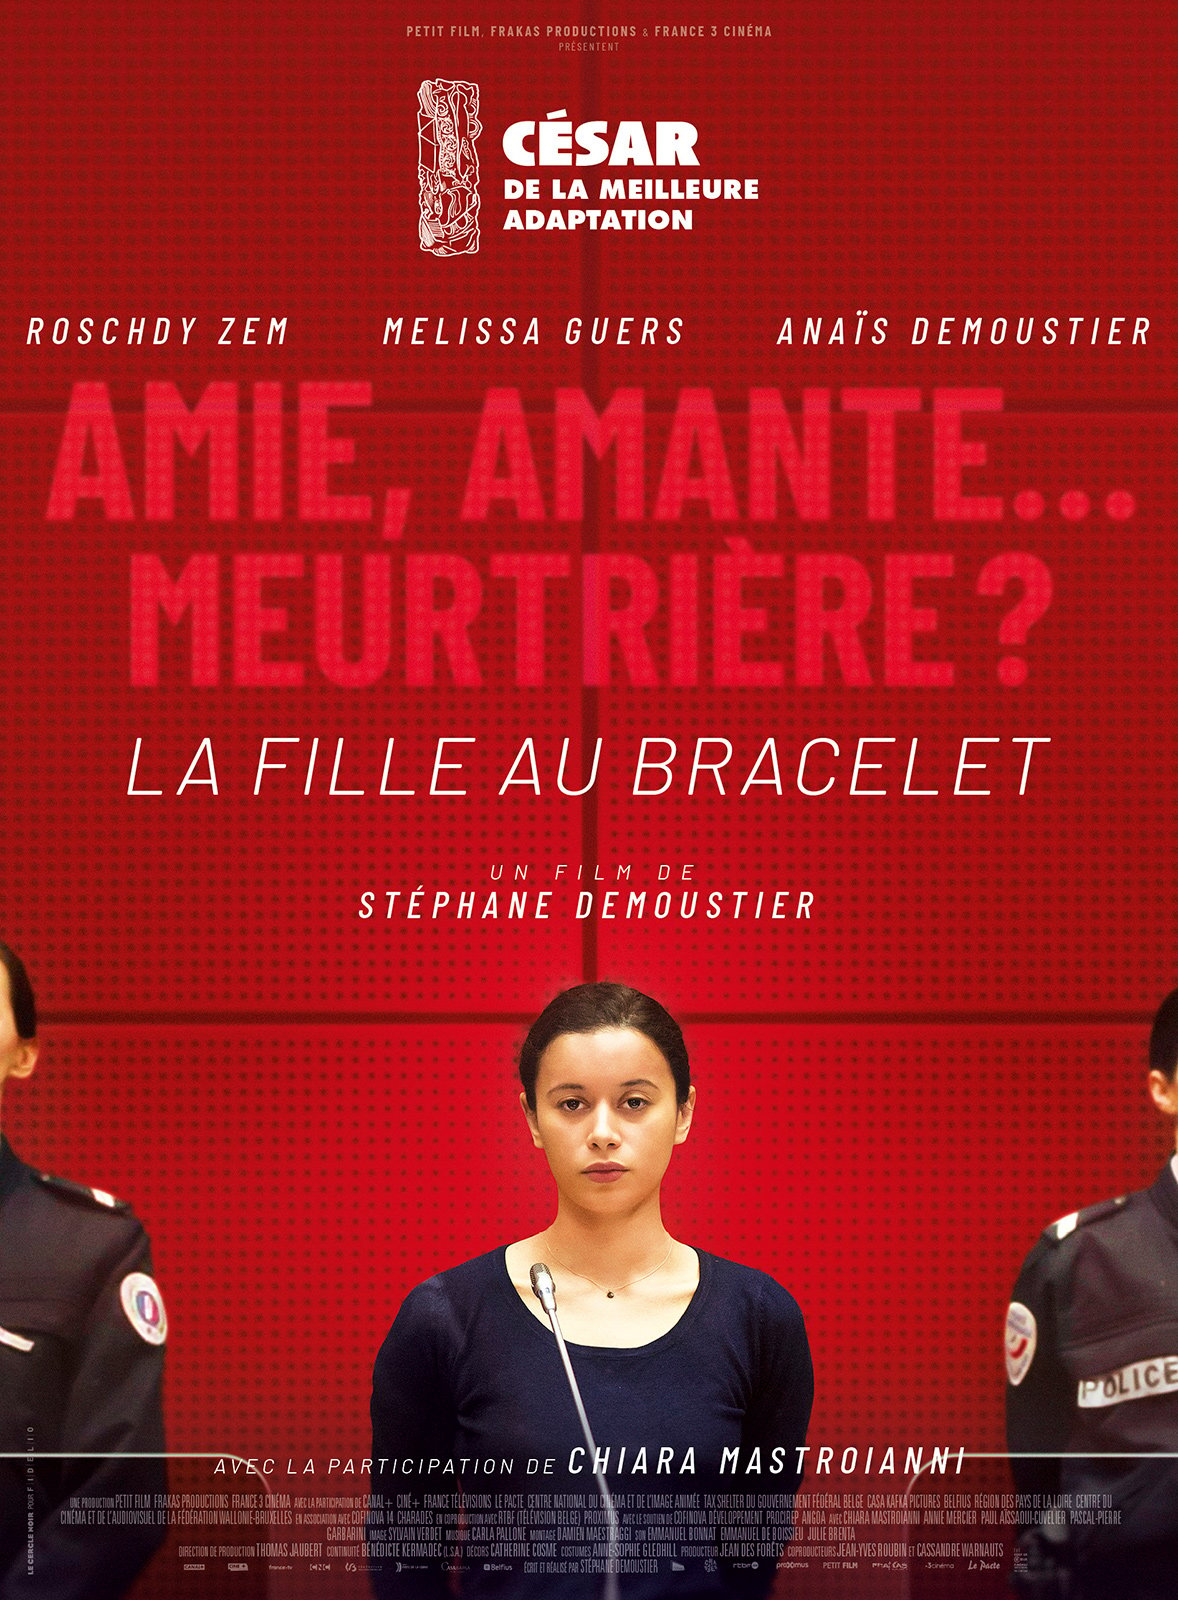 Bracelet petites filles -  France